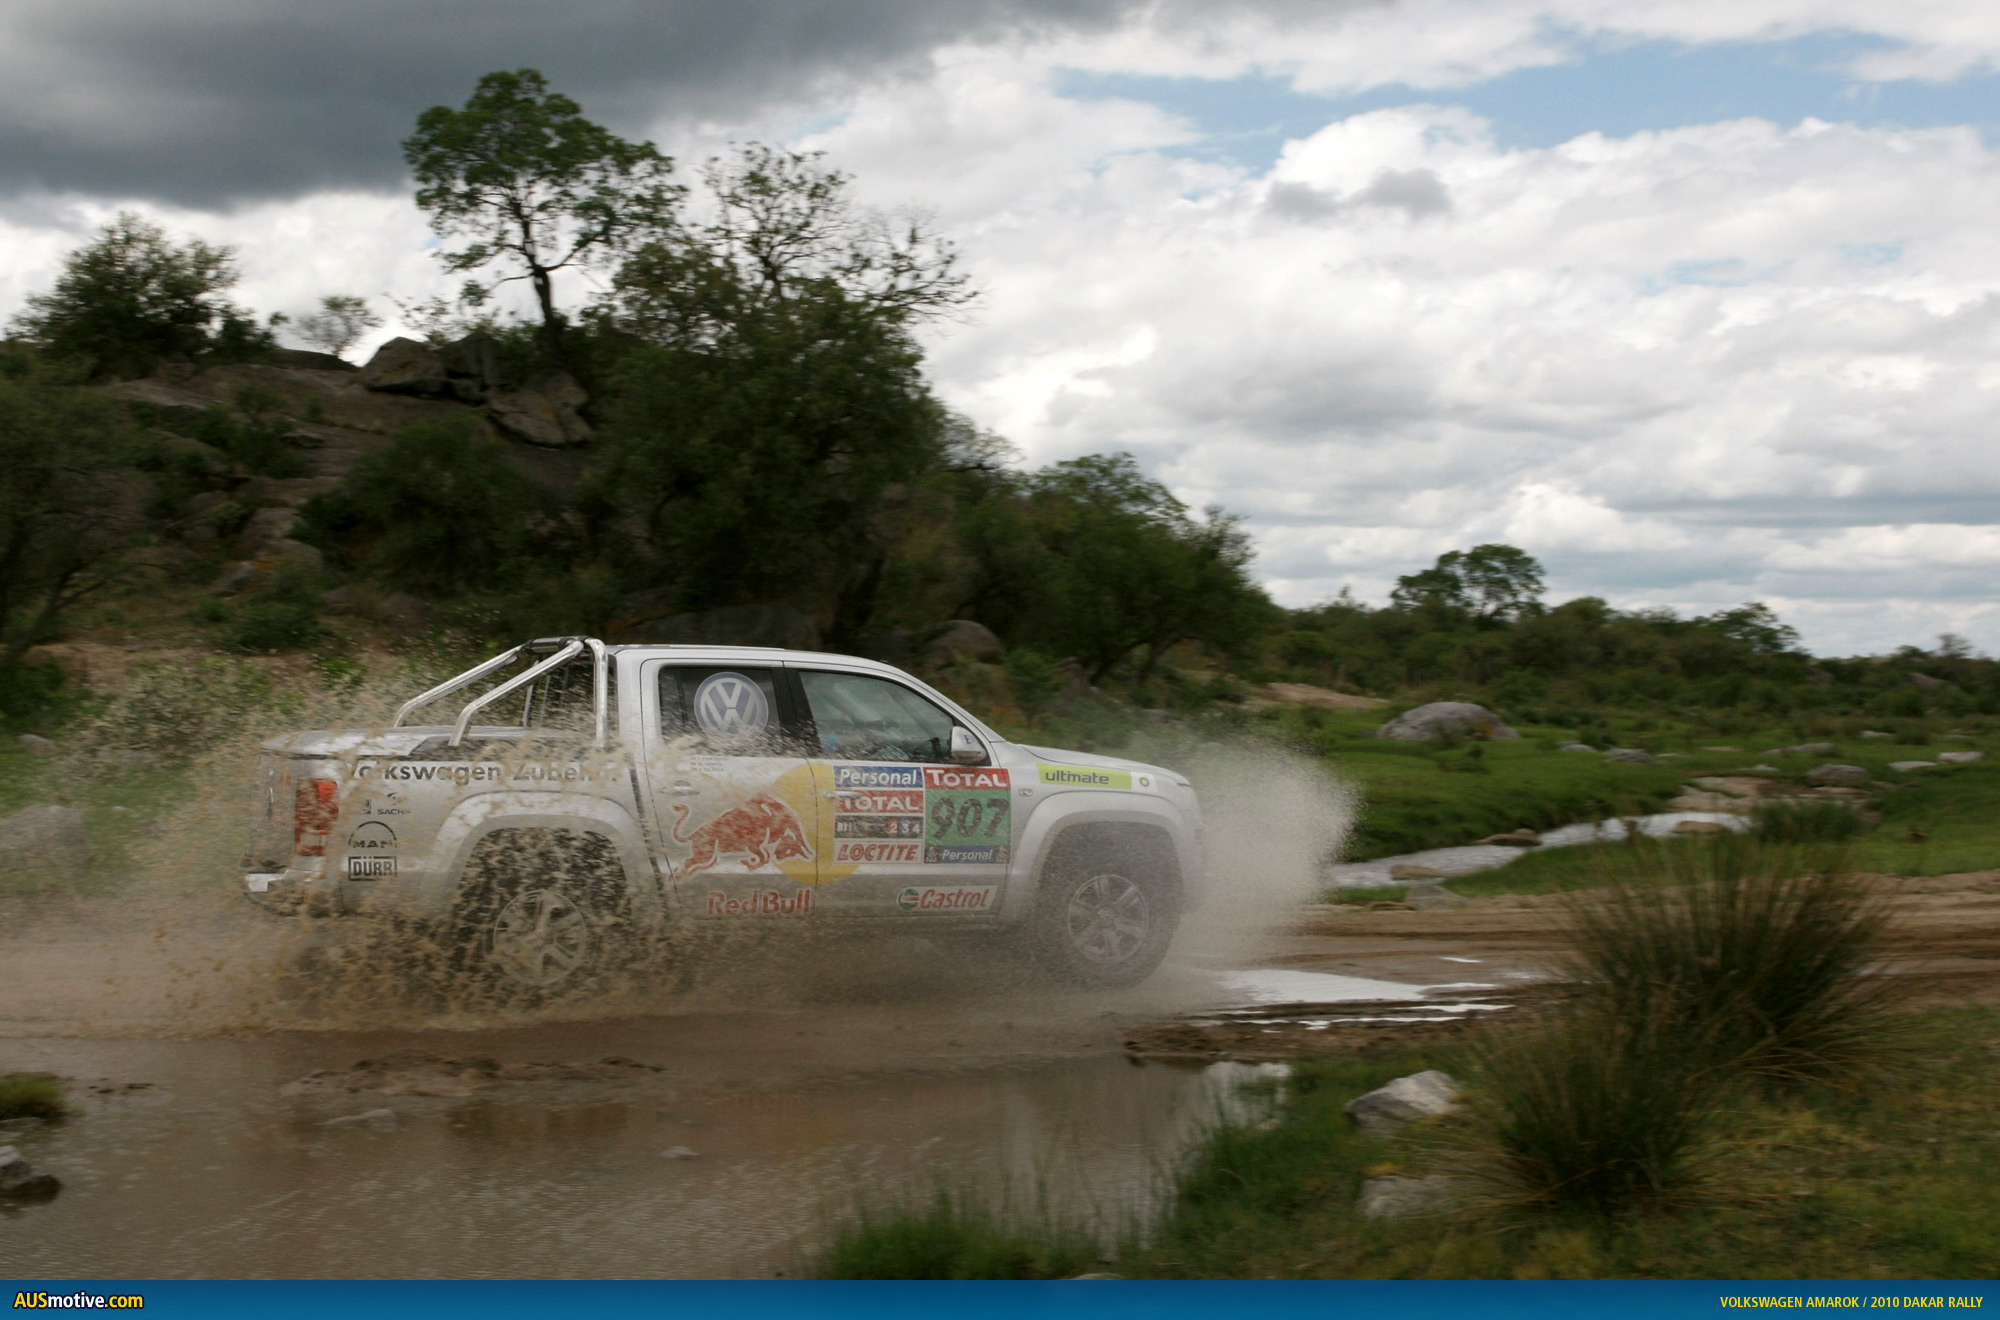 AUSmotive.com » Volkswagen Amarok at 2010 Dakar Rally